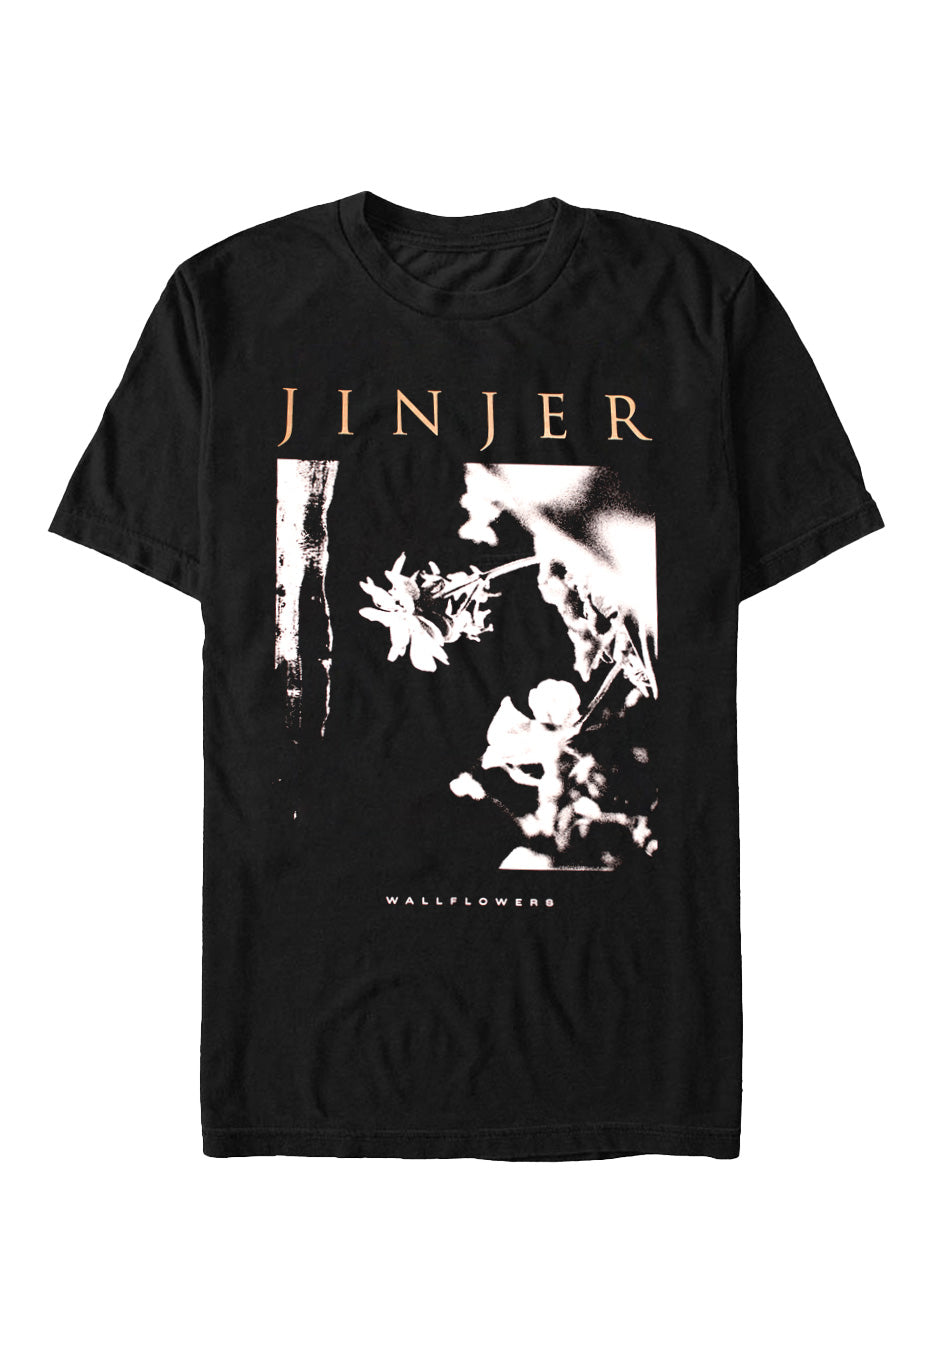 Jinjer - Wallflowers - T-Shirt